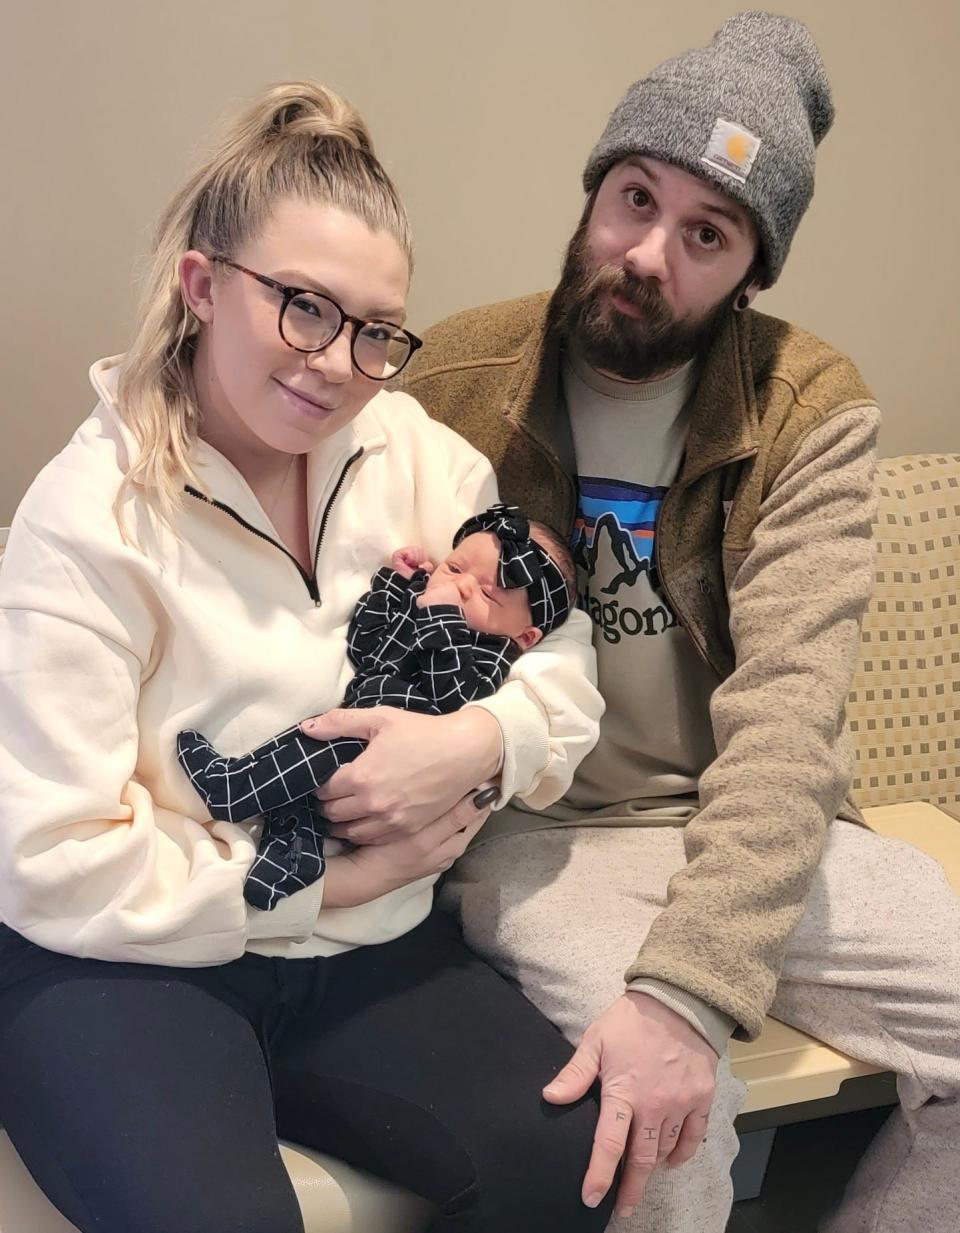 Hunterdon County saw a baby girl born to Robyn Van Hise and Noah Donovan of Flemington. Briar Snow Donovan was born at 2:48 a.m. at Hunterdon Medical Center.